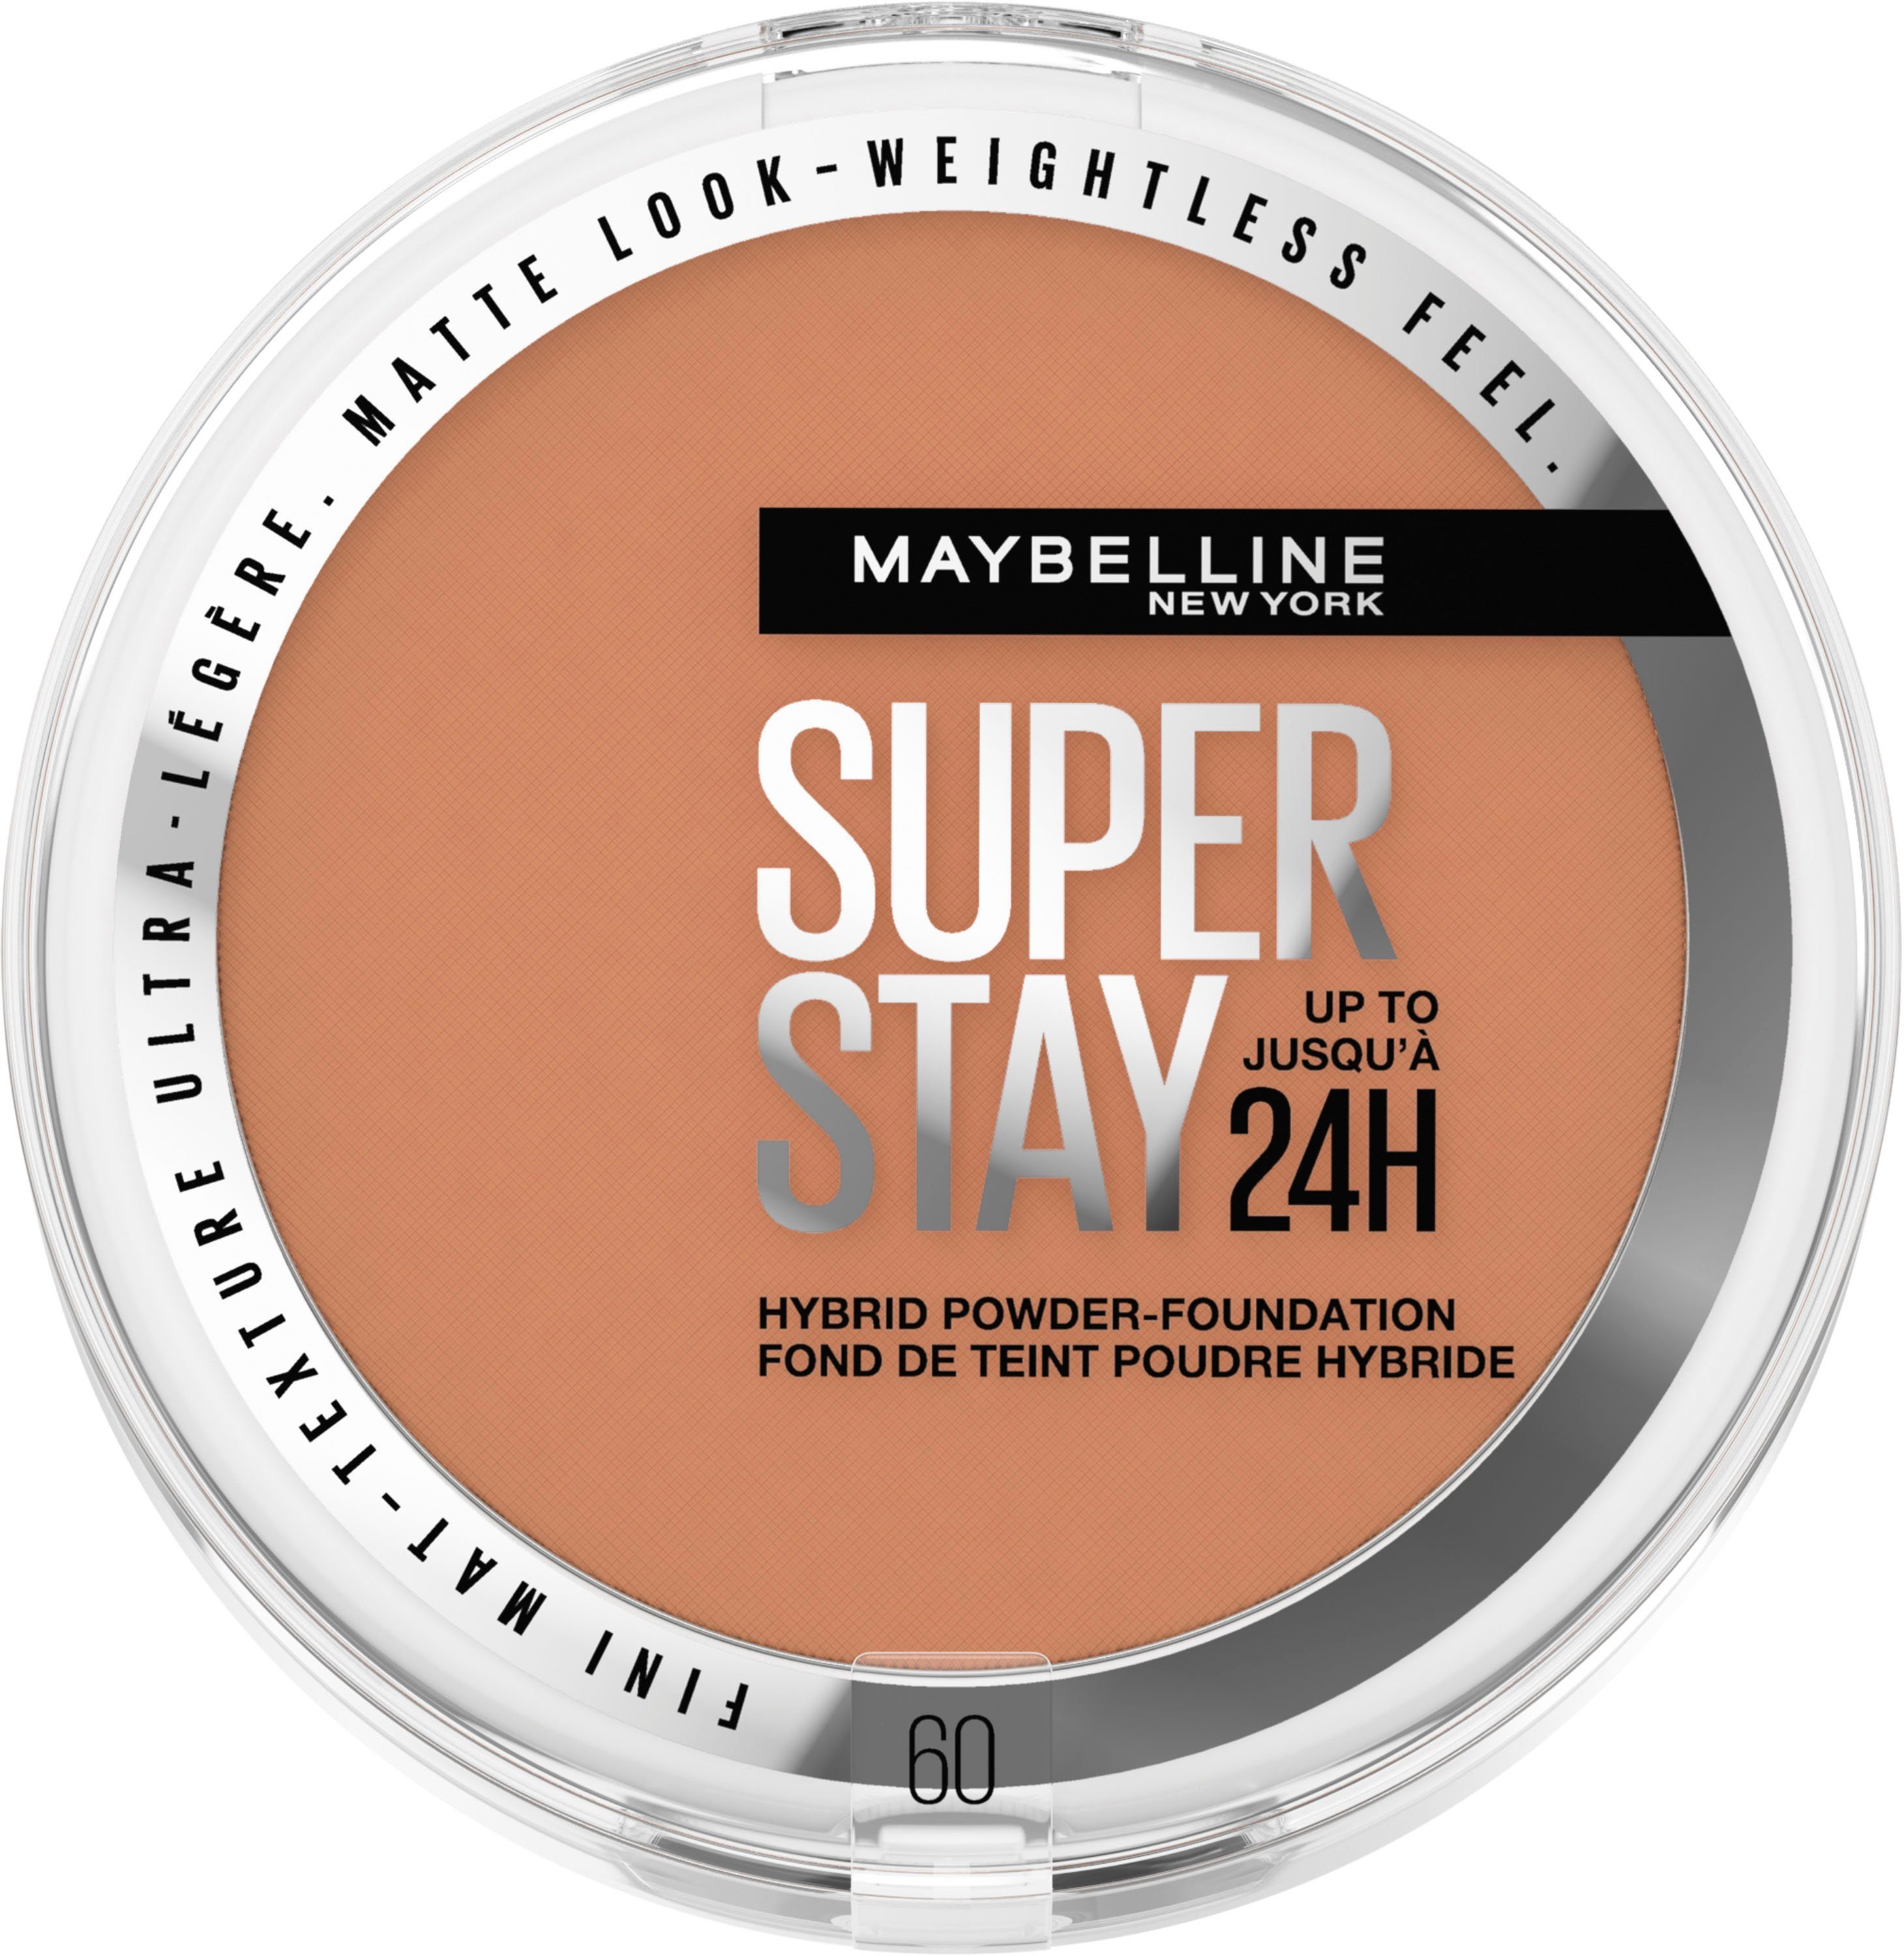 Foundation Make-Up Maybelline Puder Stay YORK NEW MAYBELLINE York Super New Hybrides